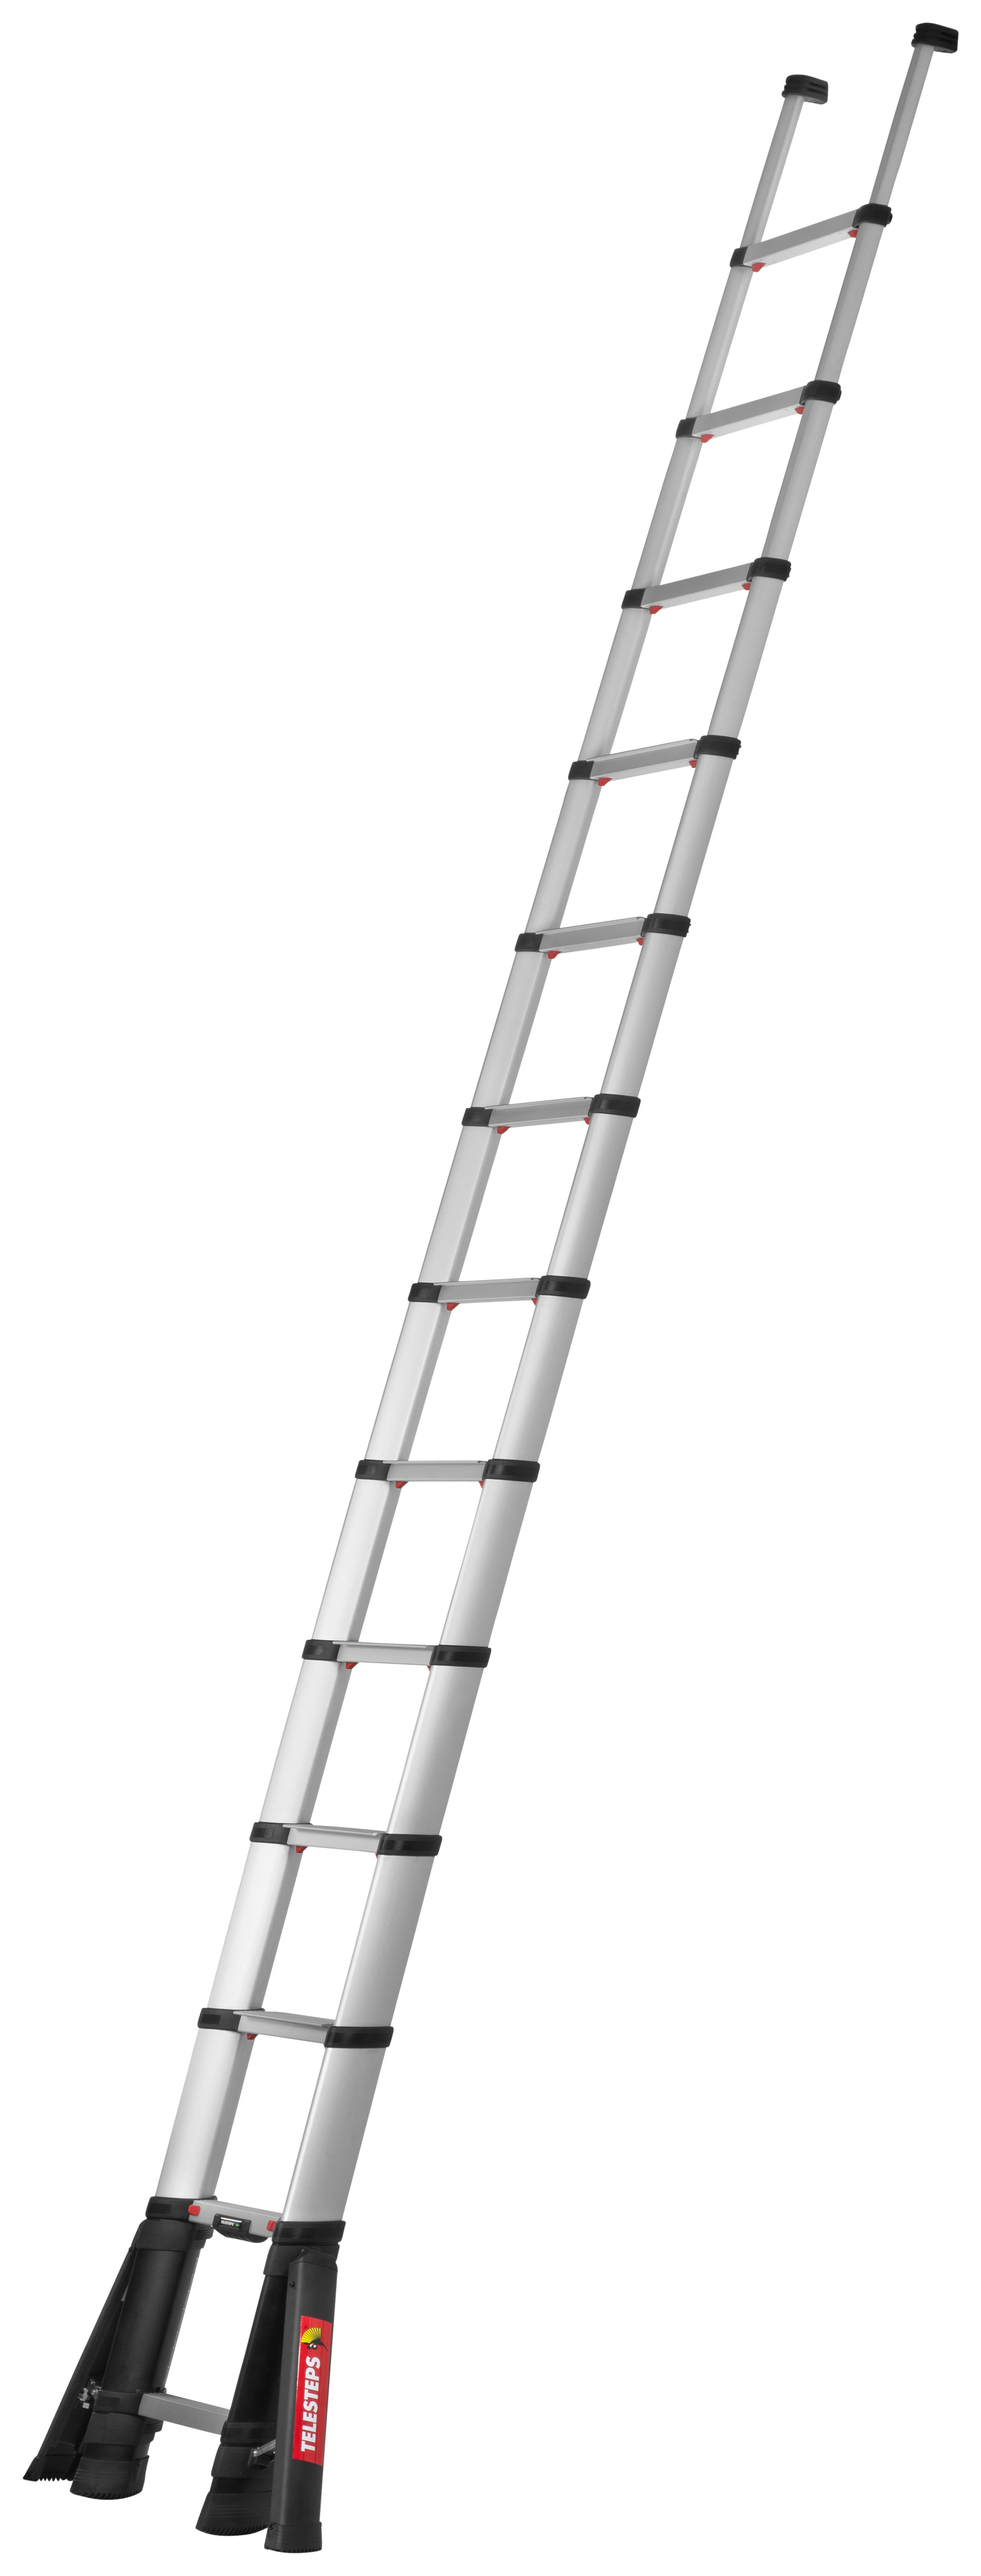 Telesteps Prime Line 4.1m Aluminium Telescopic Ladder with Stabilisers - Max Height 4.9m